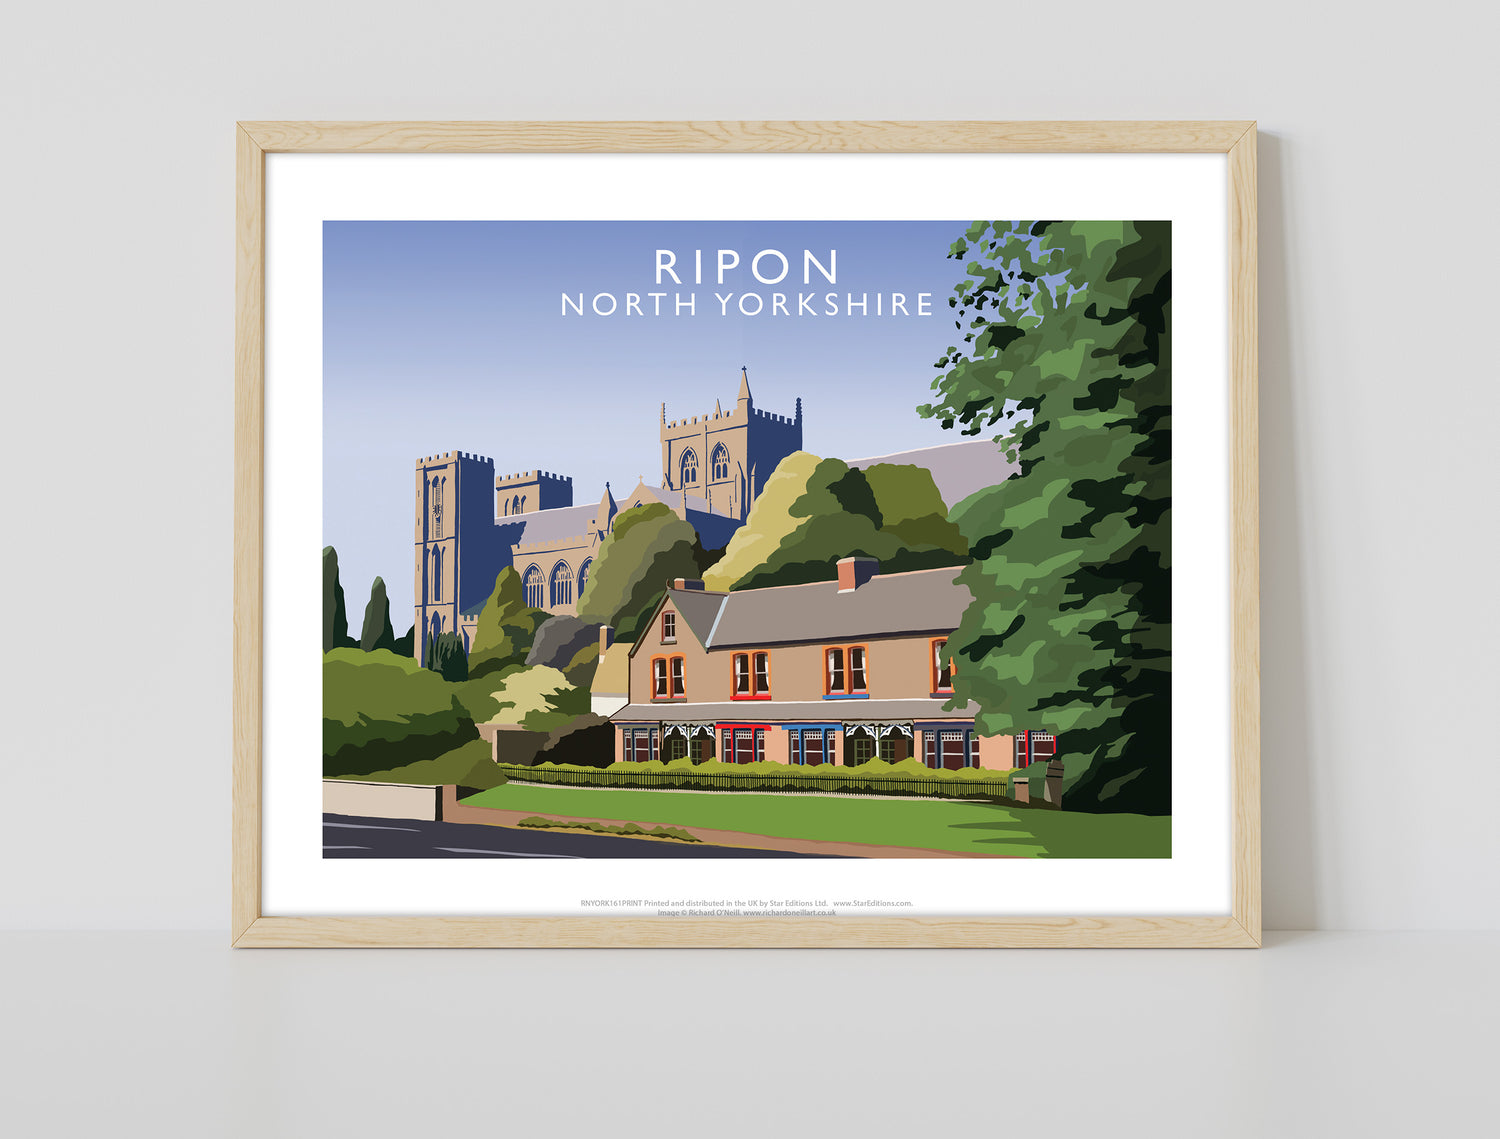 Ripon, North Yorkshire - Art Print